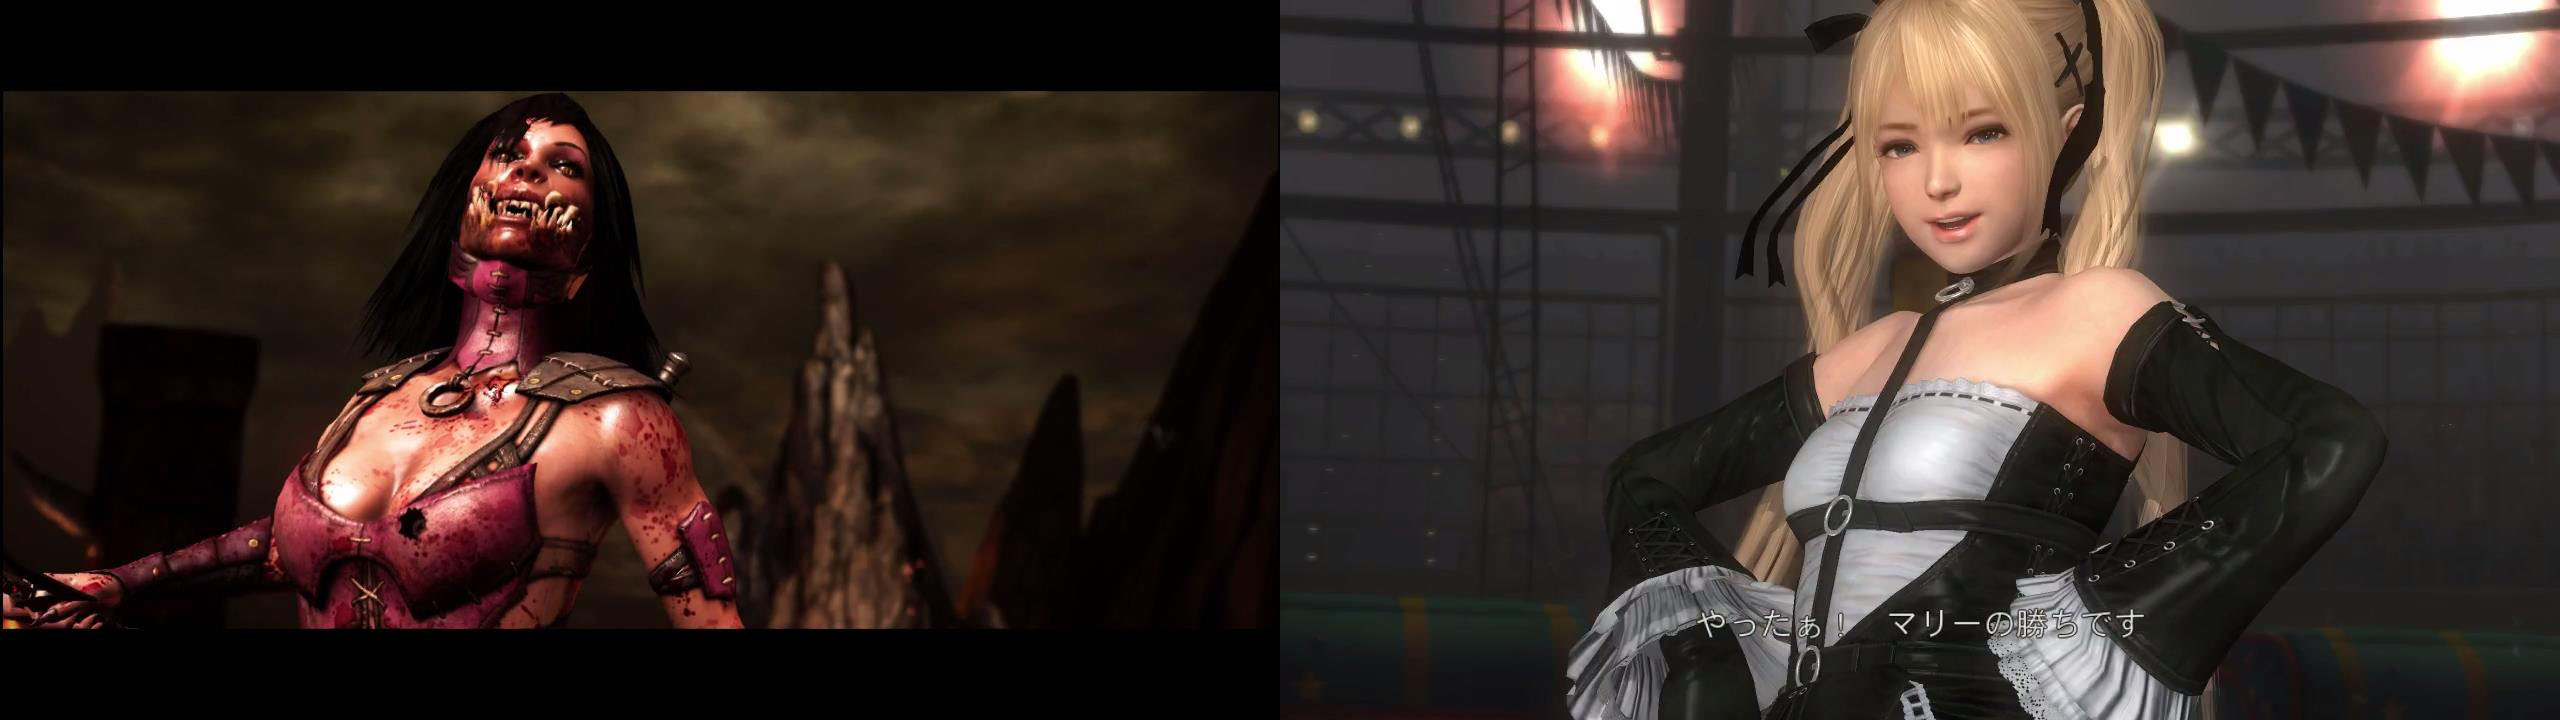 『Mortal Kombat X』PC版（左）と本作PC版（右）の比較。左はカメラ効果やテクスチャ解像度などゲーム技術の進歩がみられる。それをさしおいても、右は一級品の画質だ。